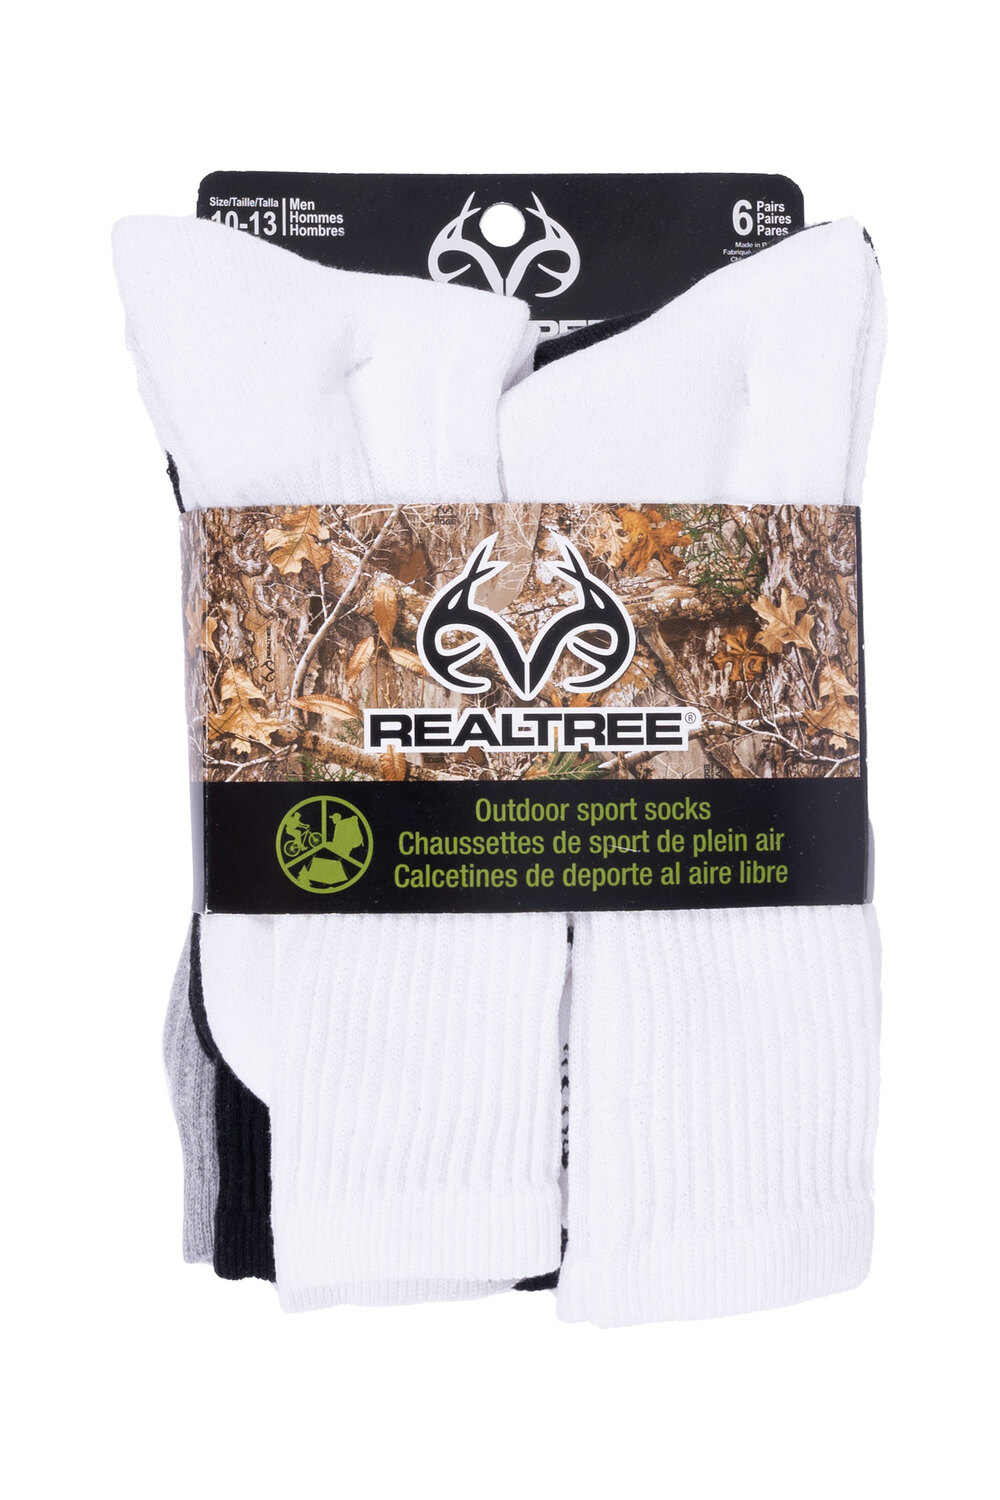 Realtree - Outdoor crew-cut sport socks - 6 pairs